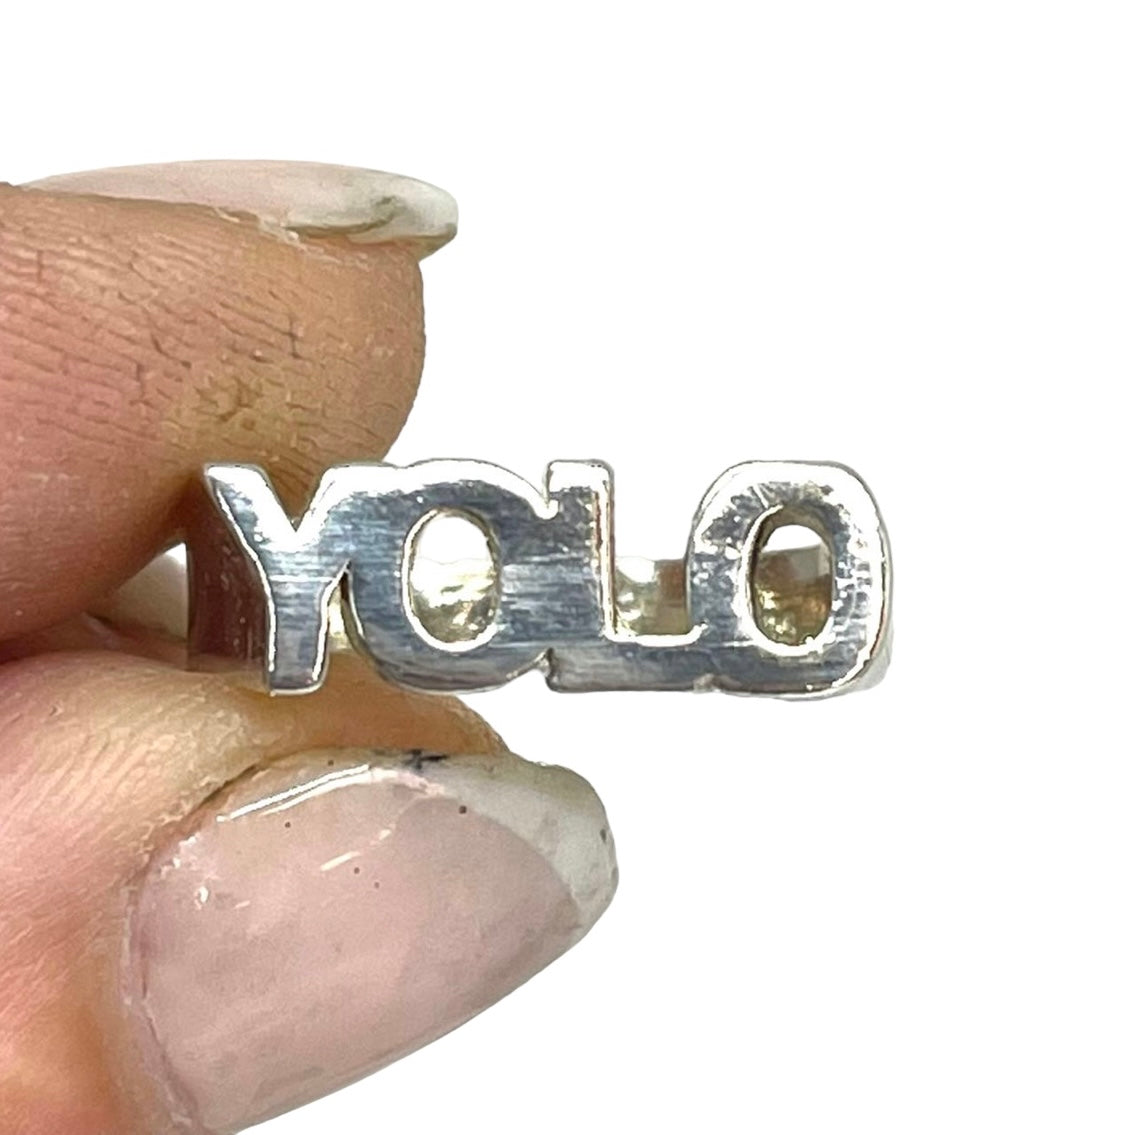 YOLO ring 